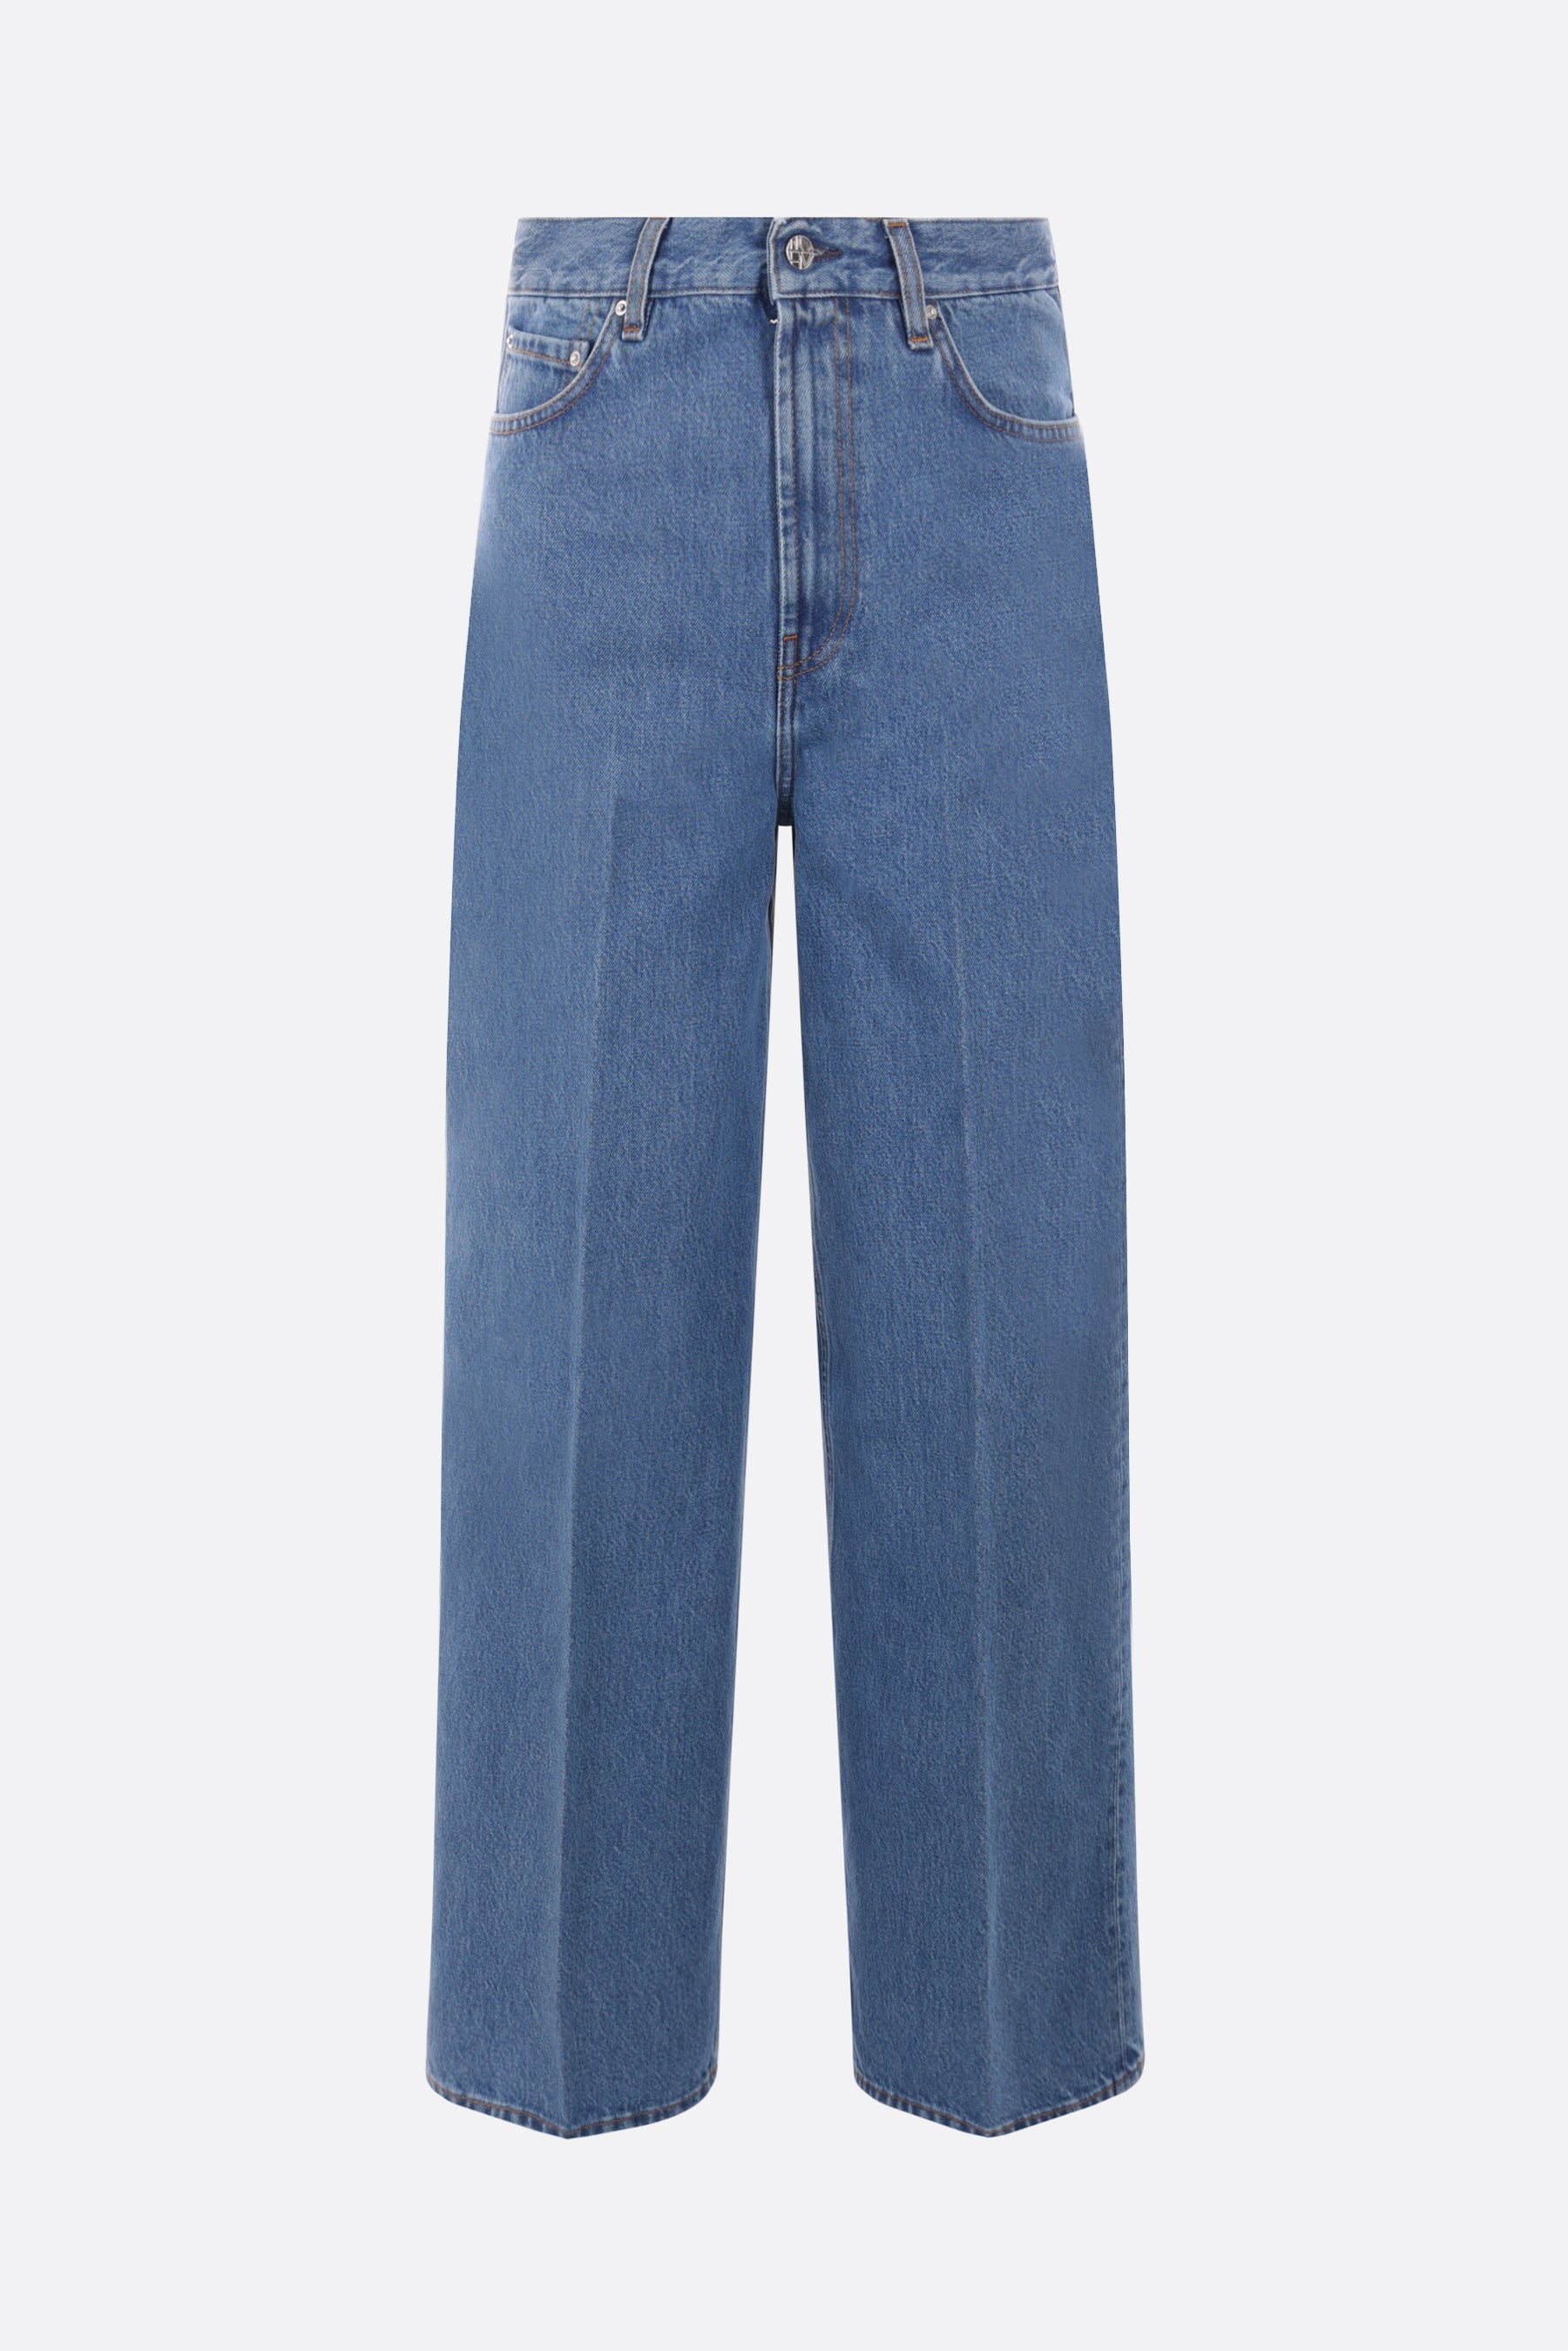 jeans a gamba larga in denim organico